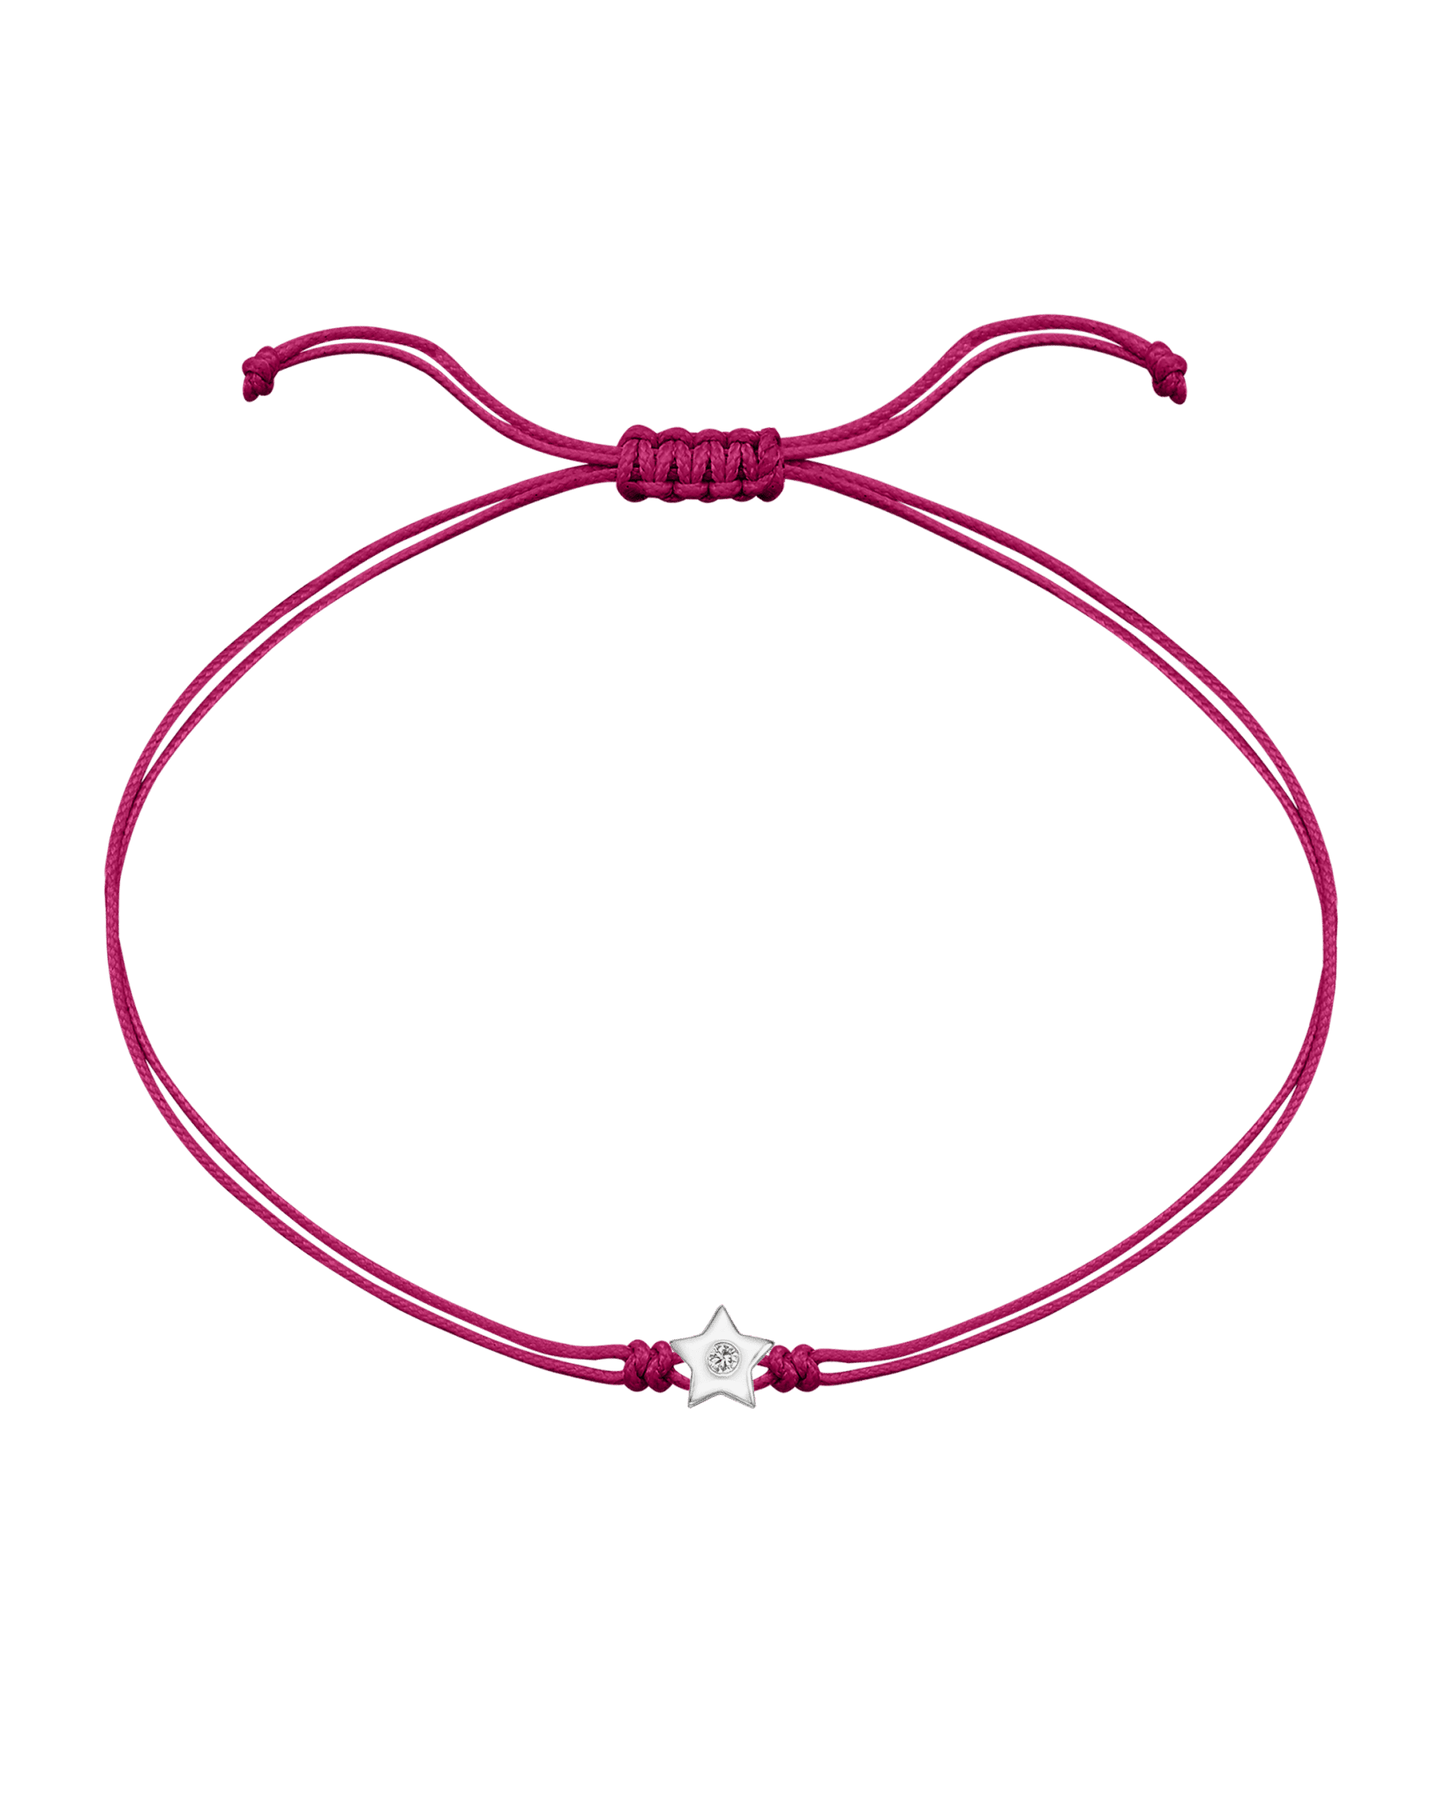 Star Diamond String Of Love - 14K White Gold Bracelet 14K Solid Gold Pink 